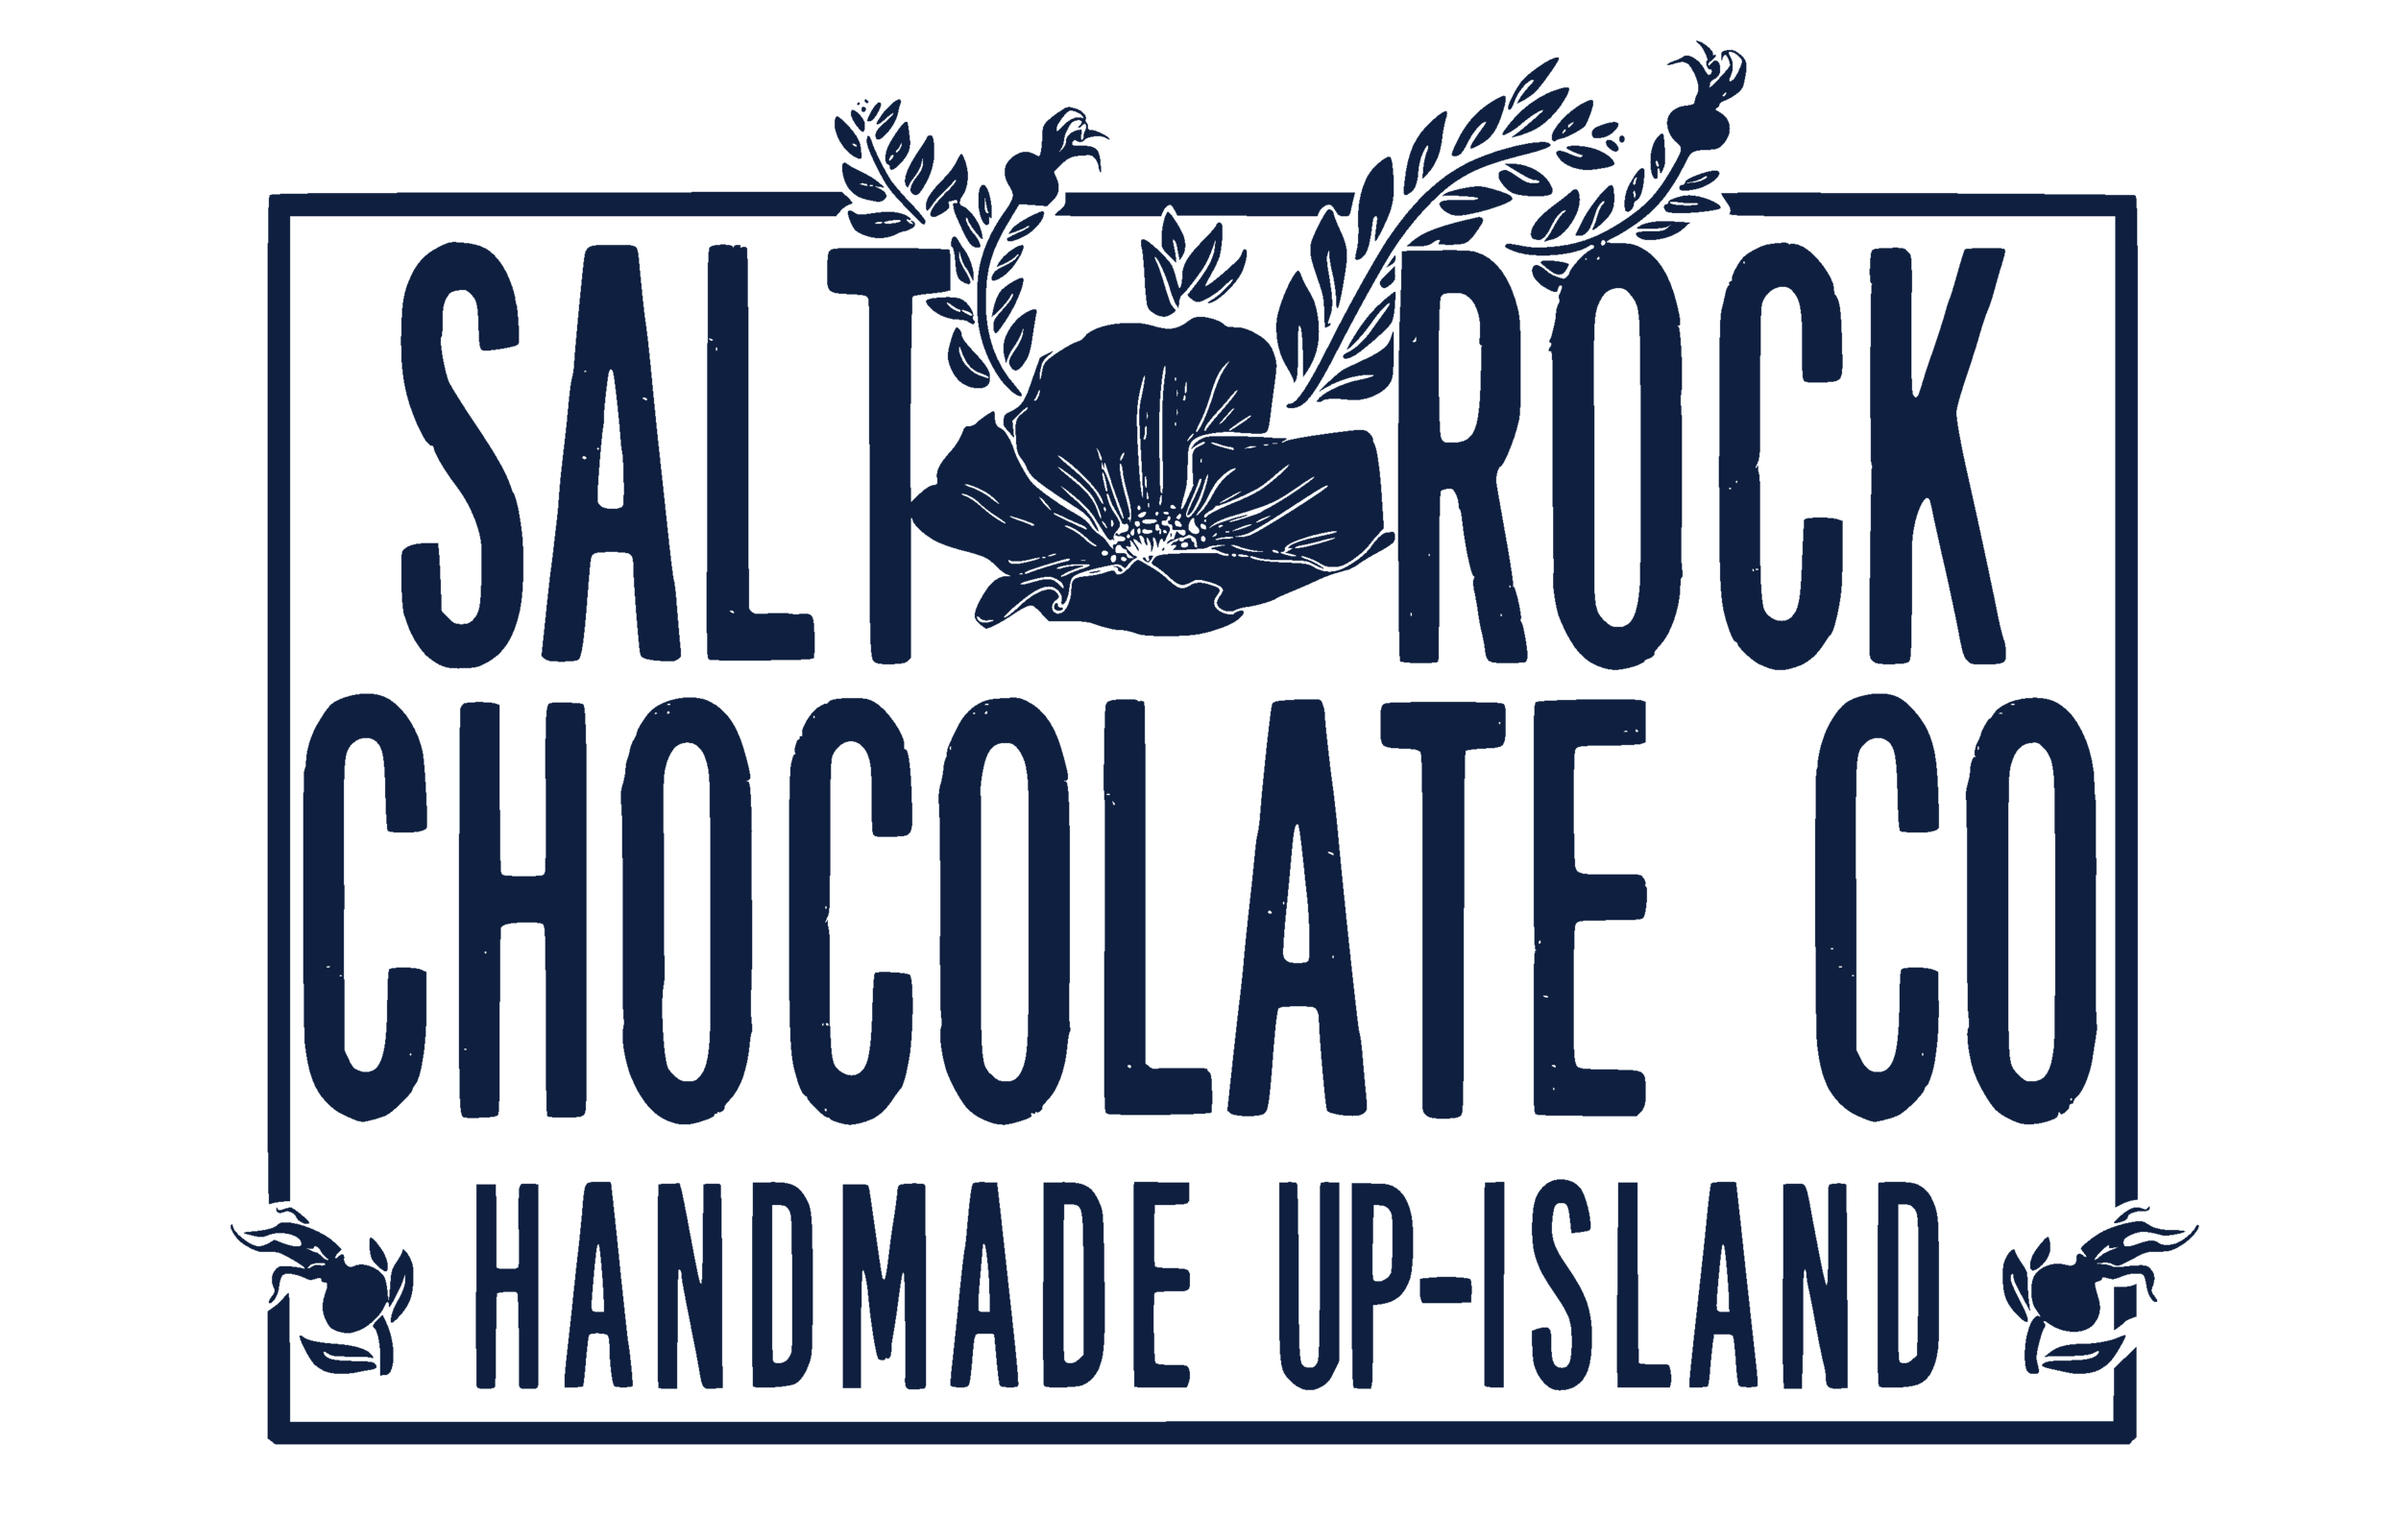 Salt Rock Chocolate Co. 